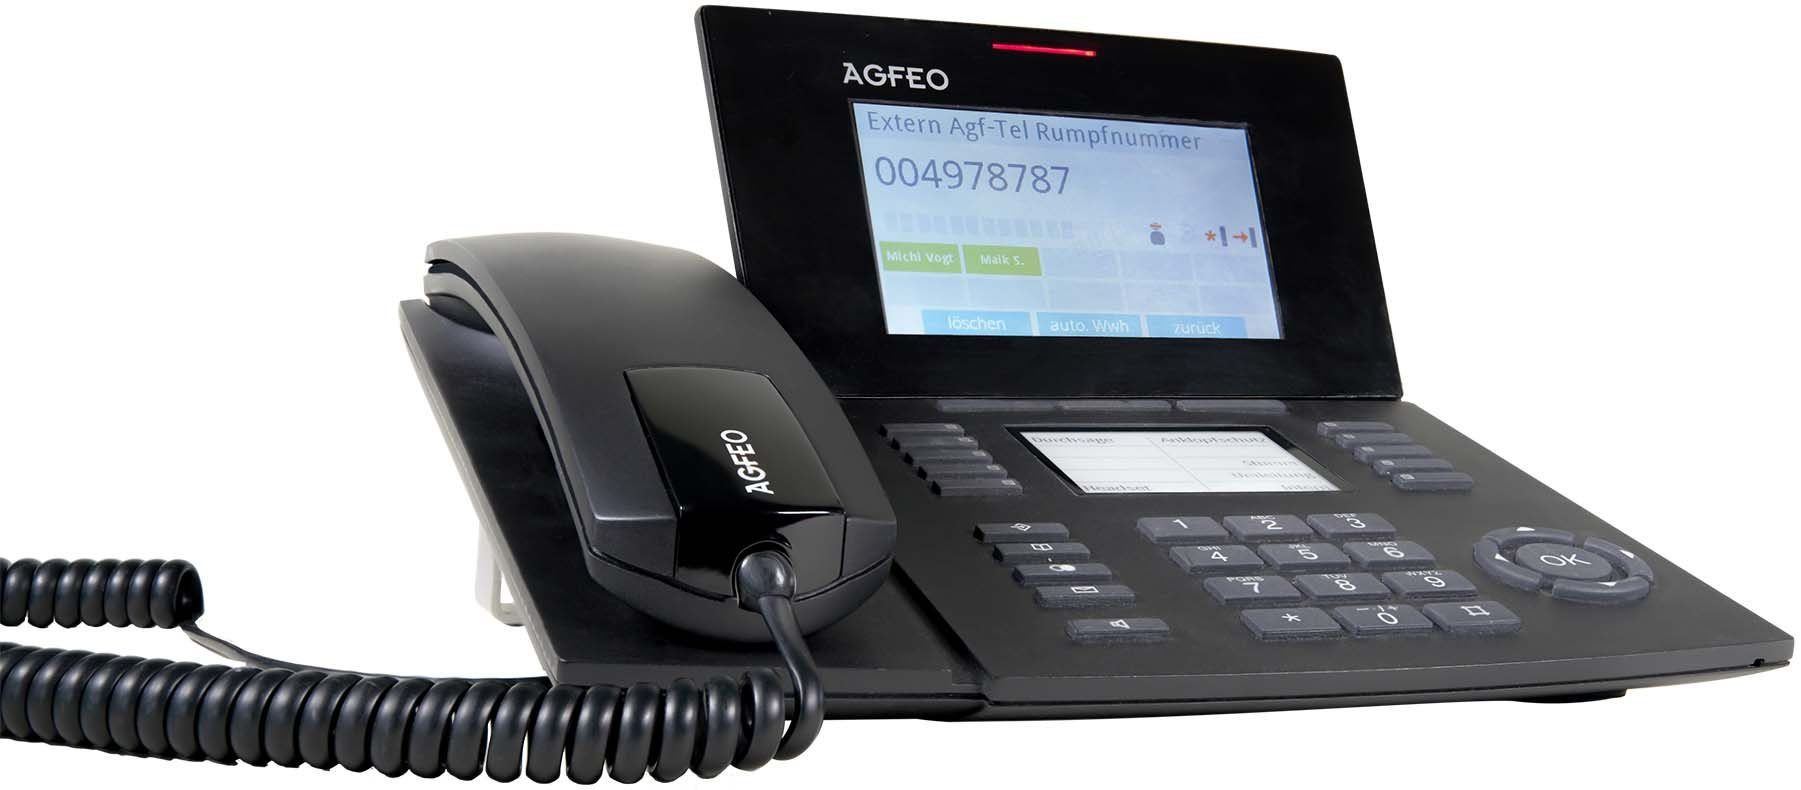 Agfeo AGFEO Systemtelefon ST56 SENSORfon schwarz Festnetztelefon